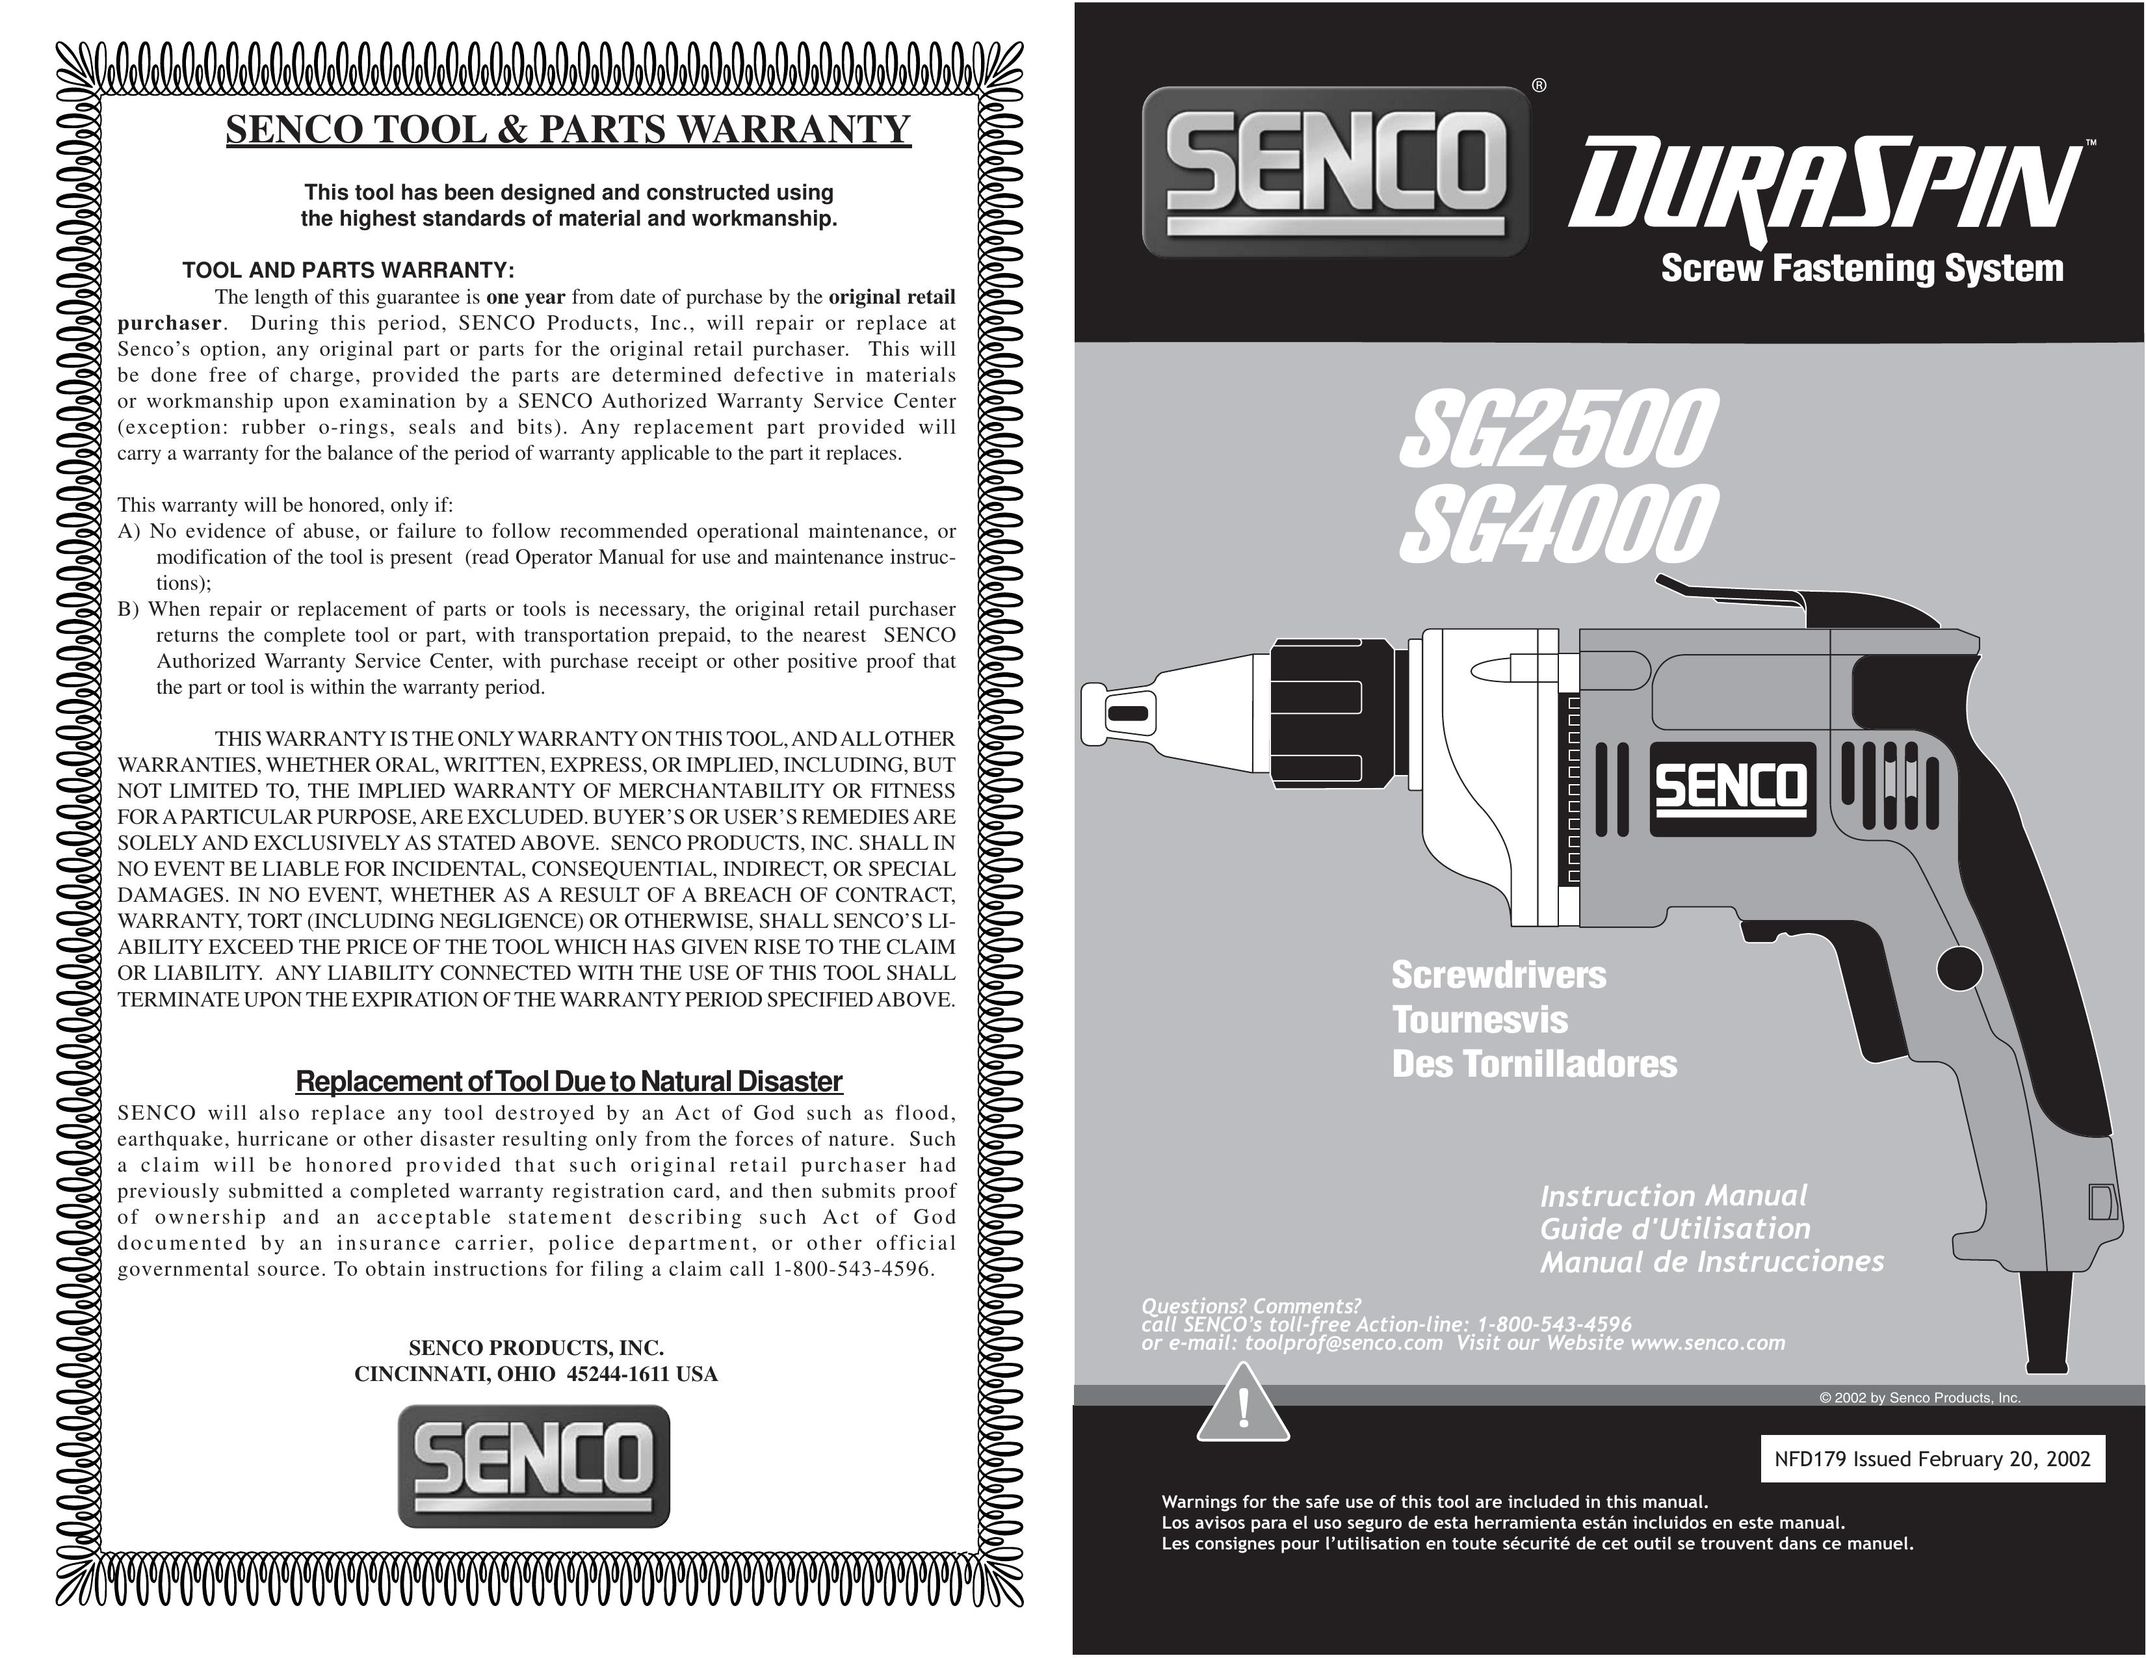 Senco SG4000 Power Screwdriver User Manual